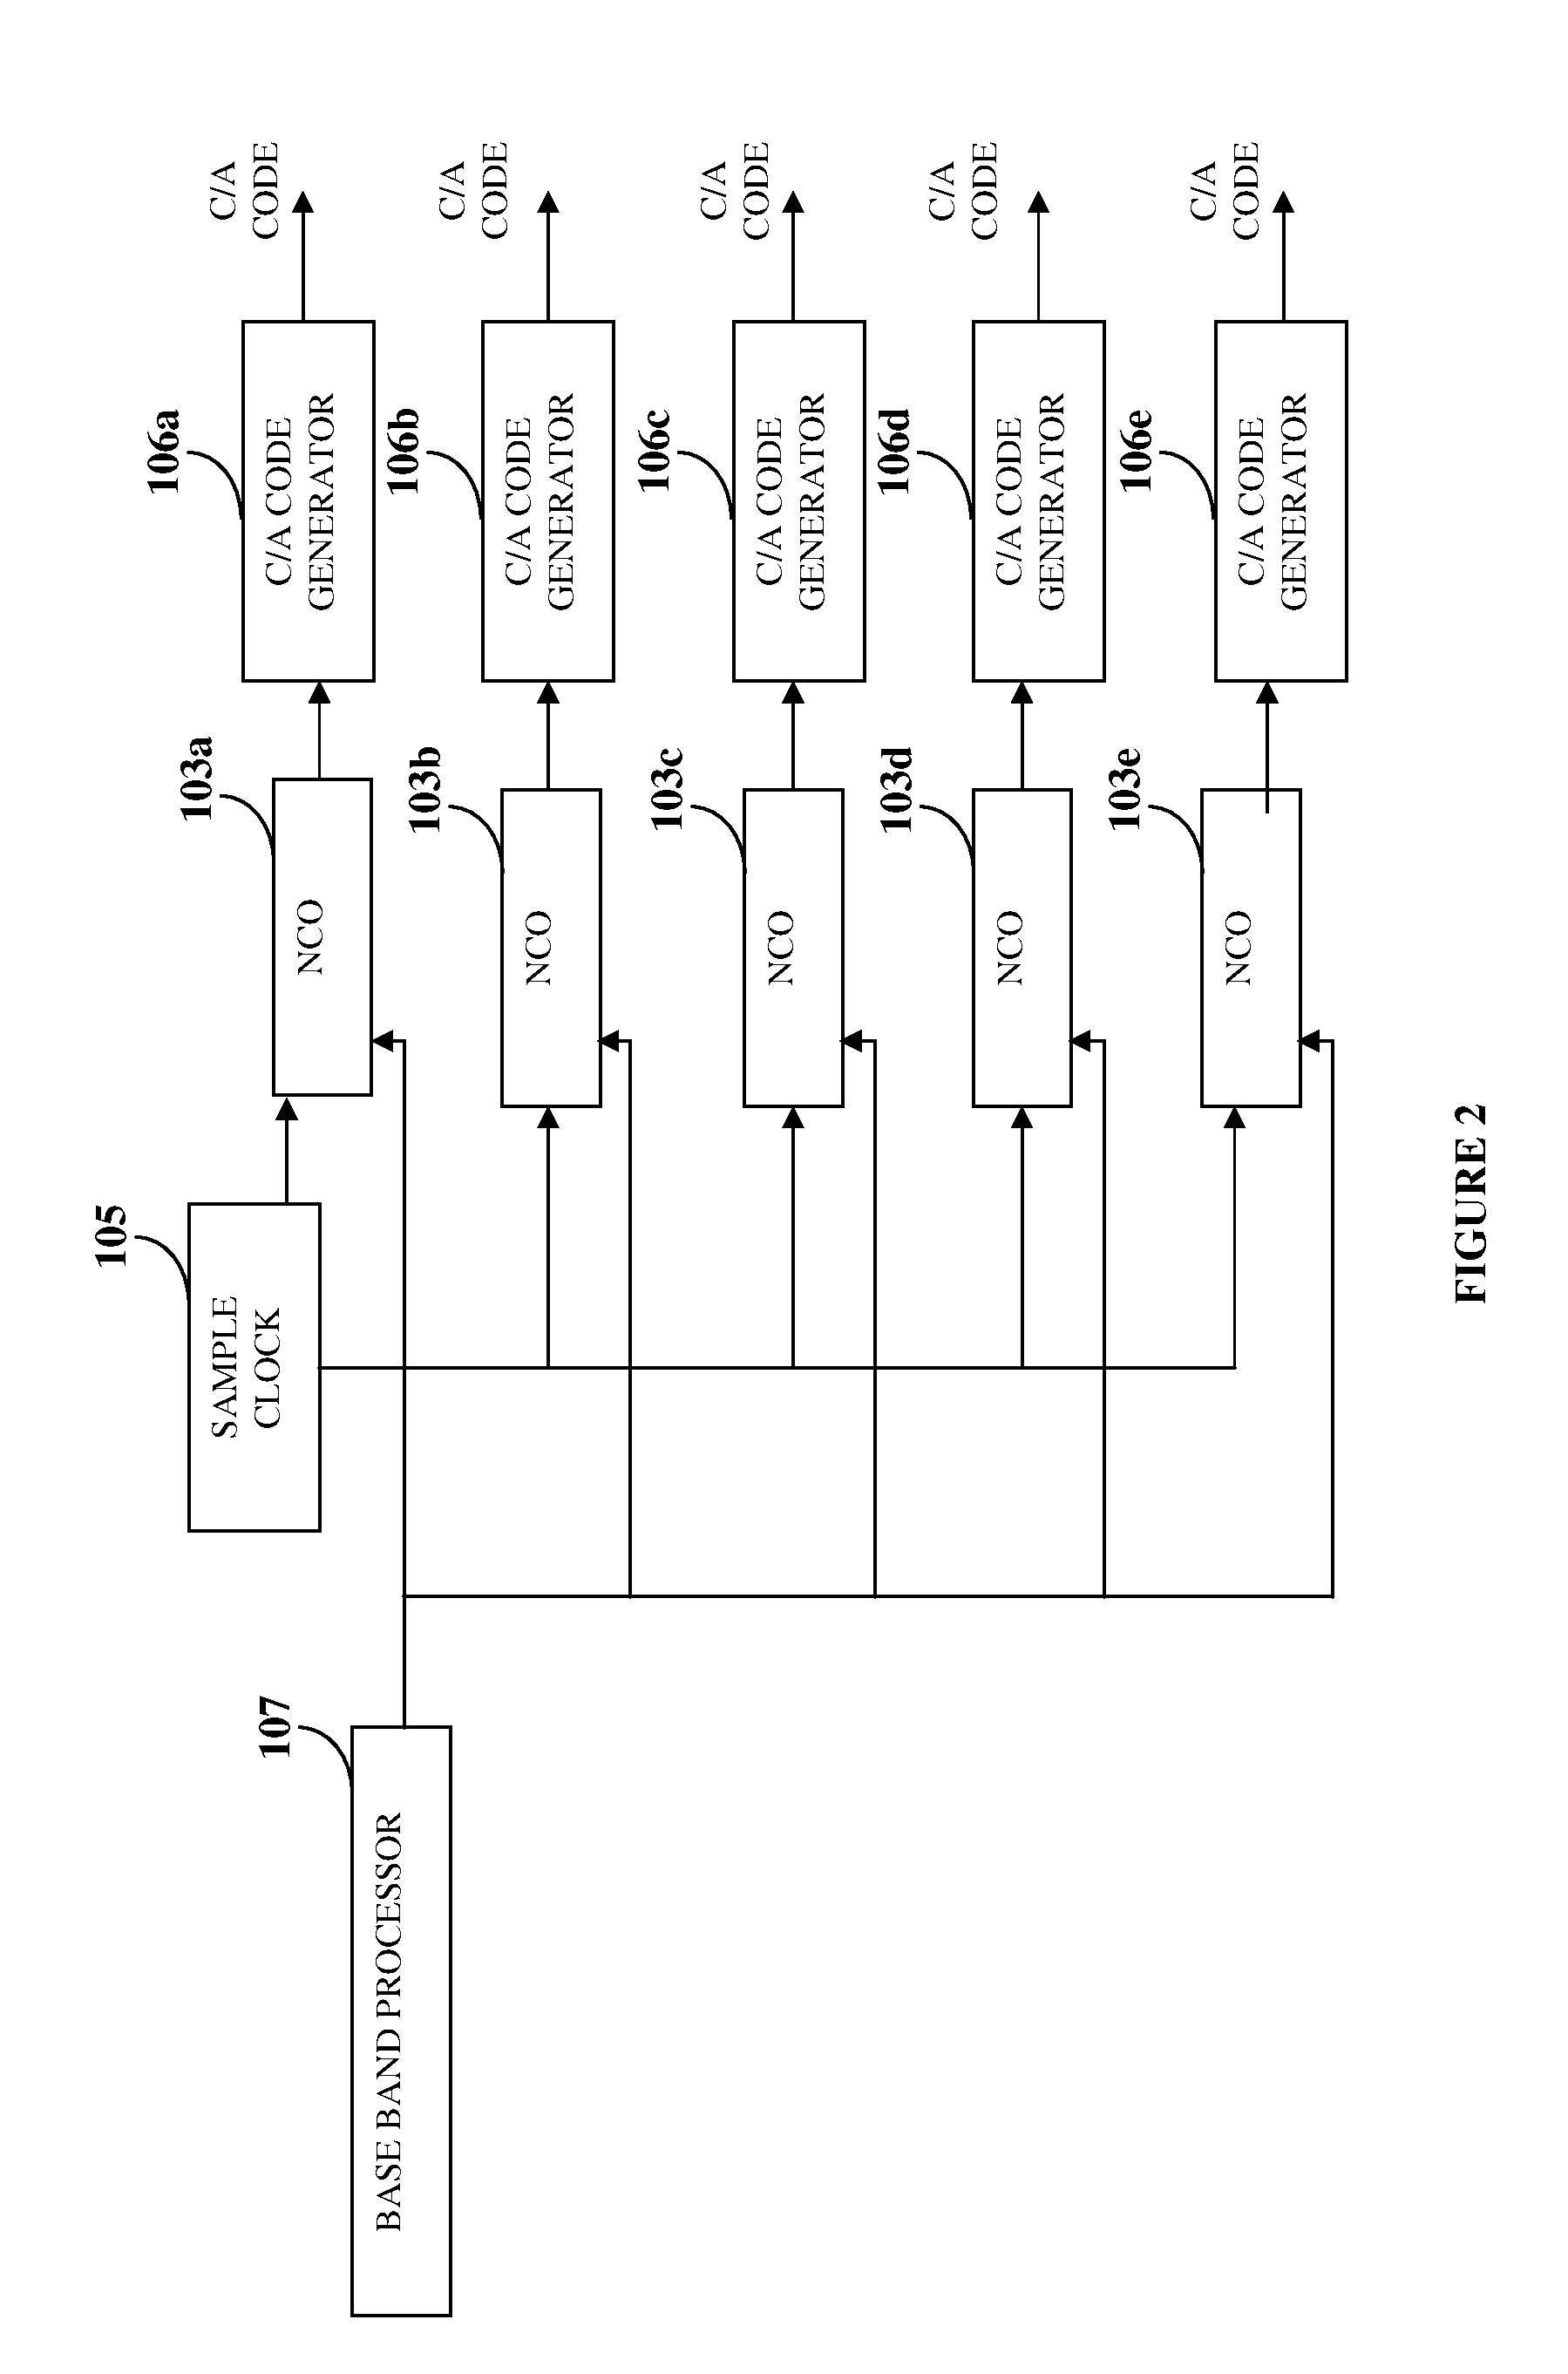 Asymmetry technique for multipath mitigation in pseudorandom noise ranging receiver